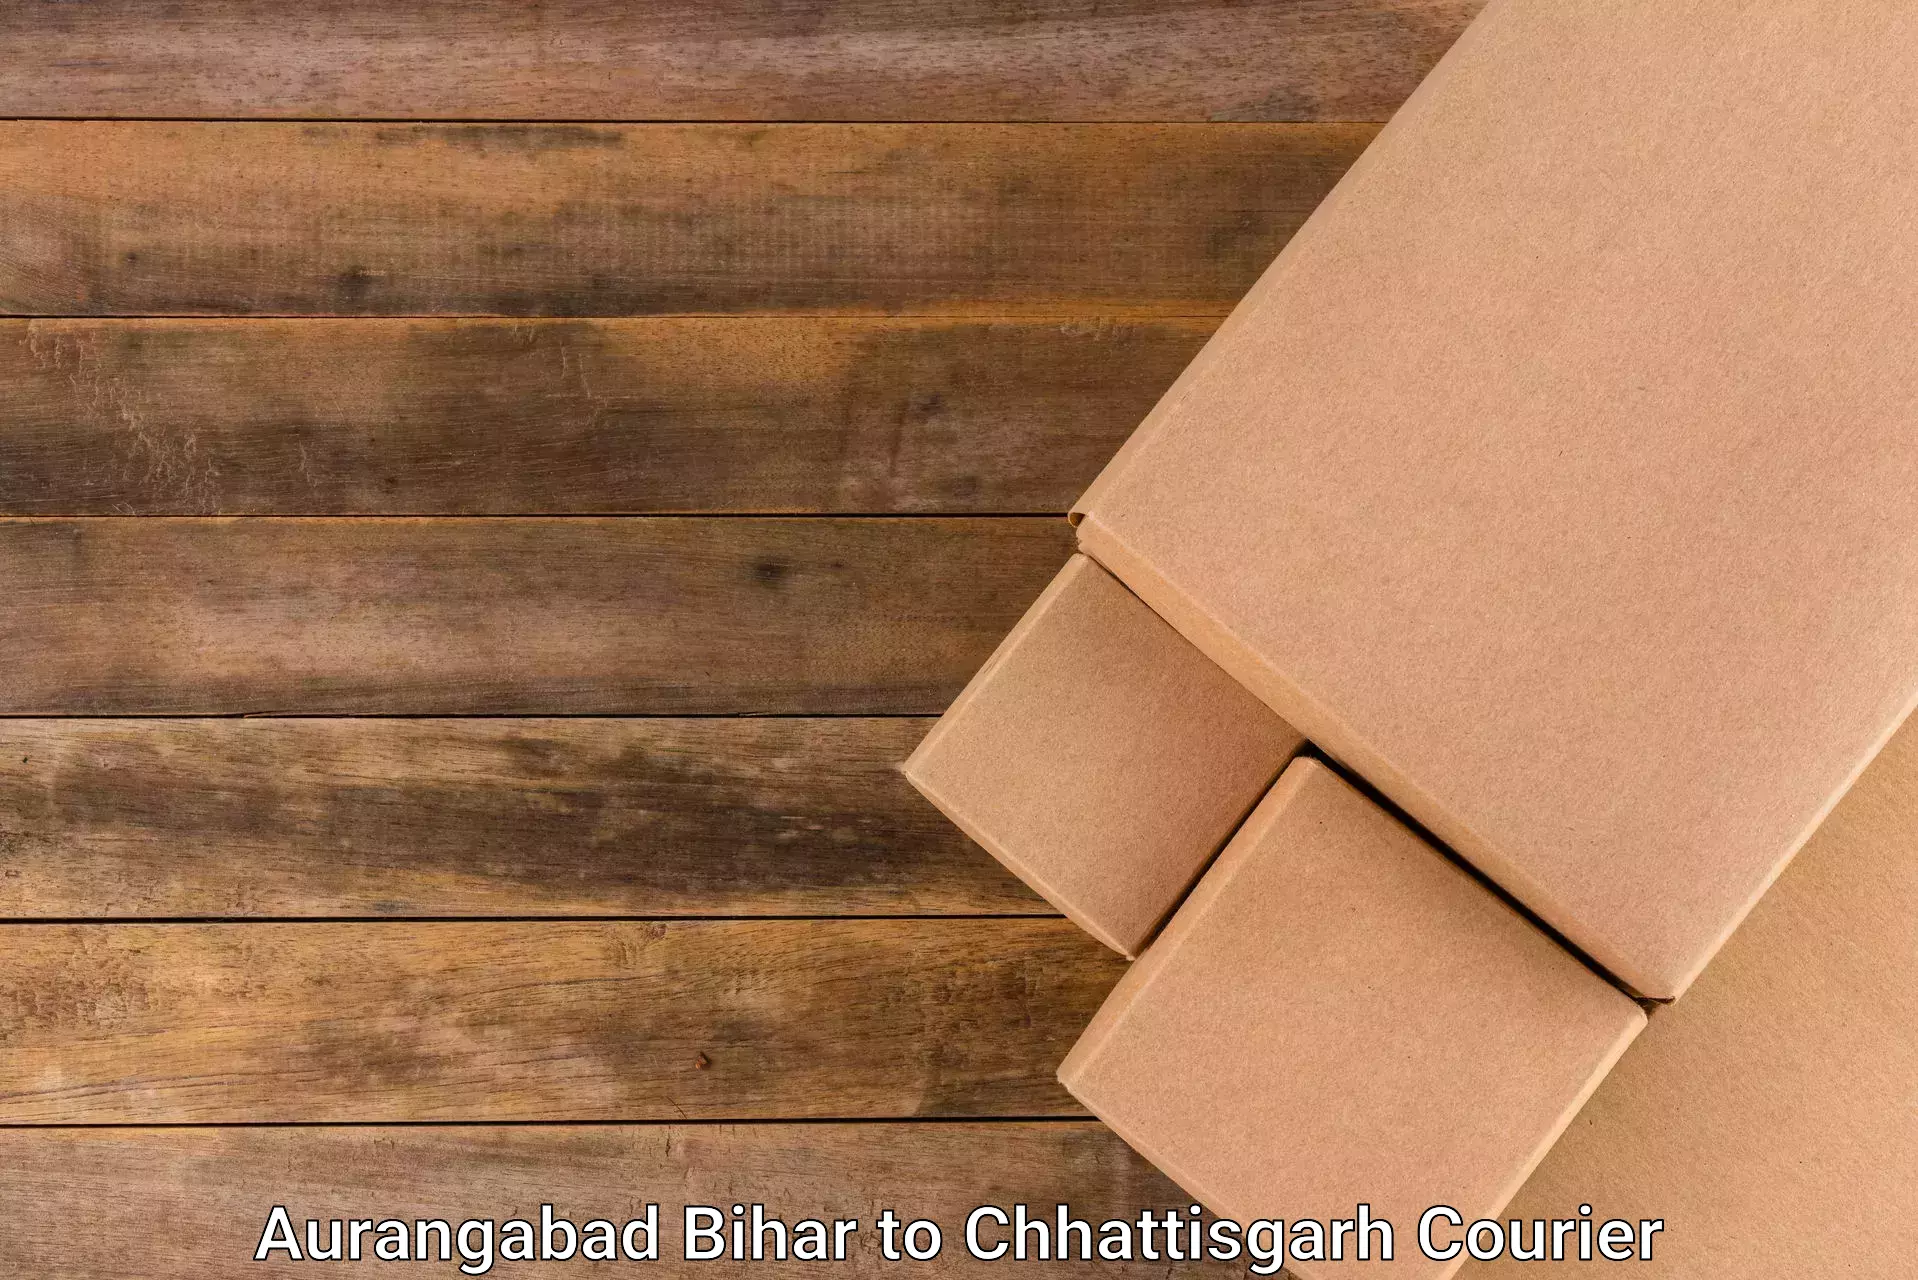 Courier app Aurangabad Bihar to Bhatgaon